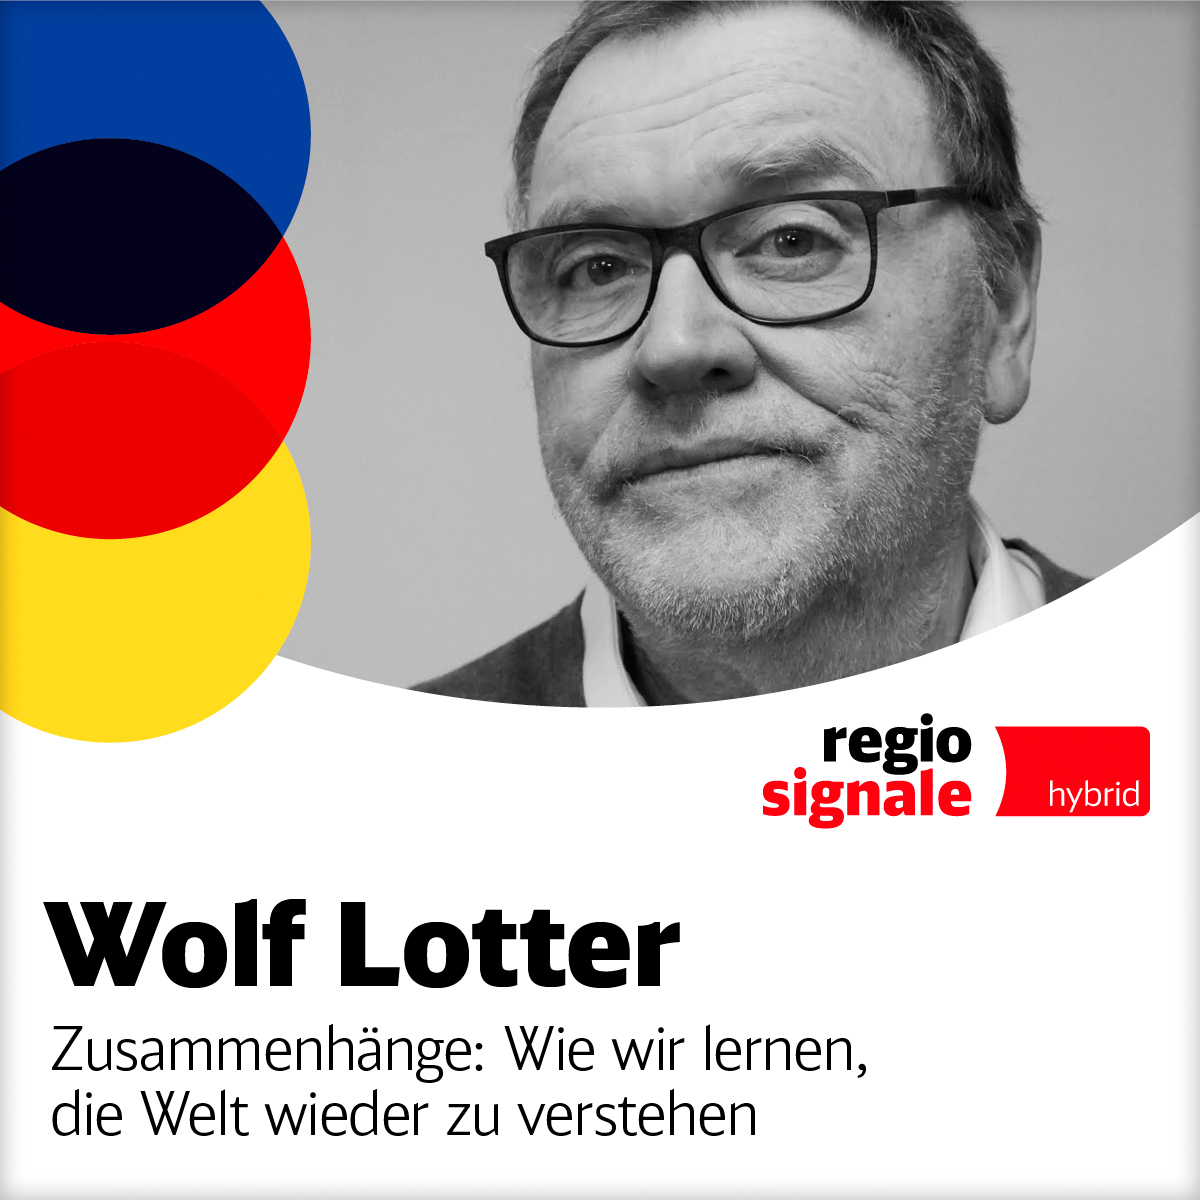 Wolf Lotter